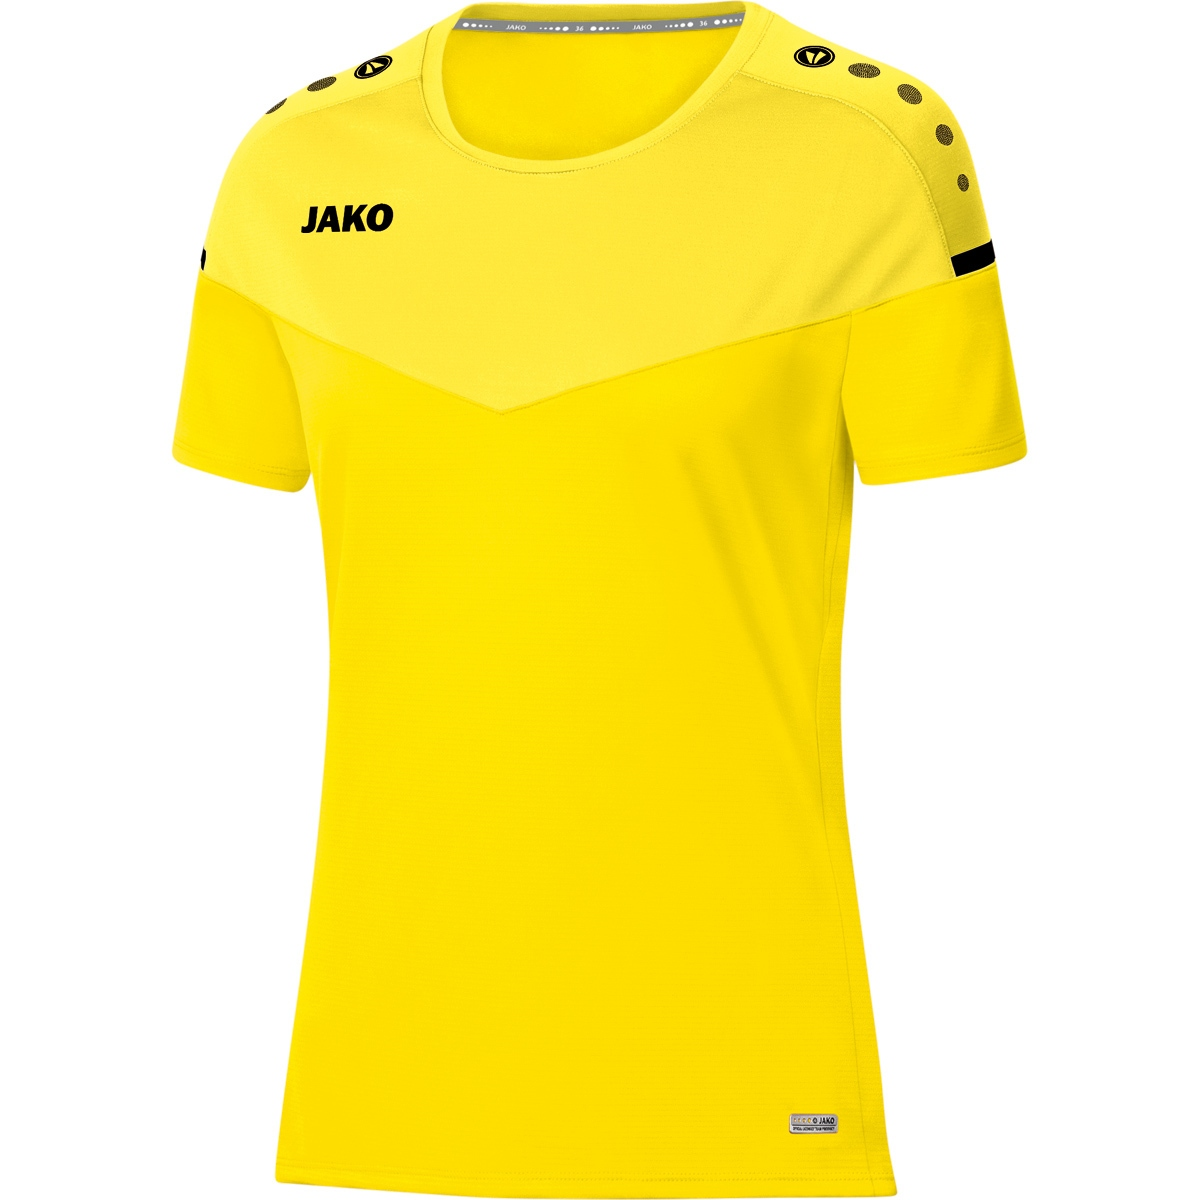 JAKO Gr. Damen, 44, citro/citro T-Shirt Champ 2.0 6120 light,